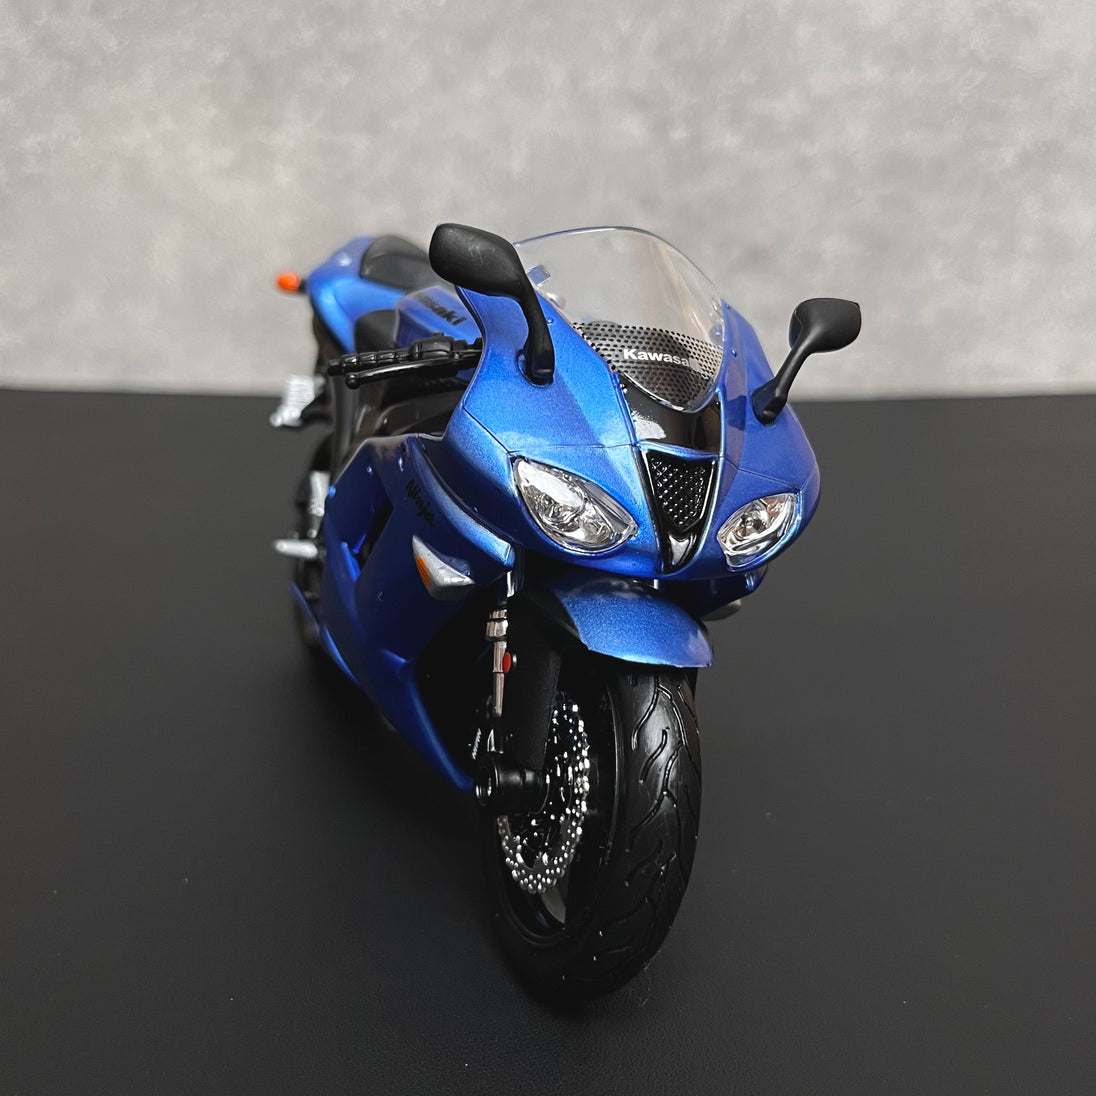 Kawasaki Ninja ZX-6R Diecast Bike 1:12 Motorcycle Model By Maisto